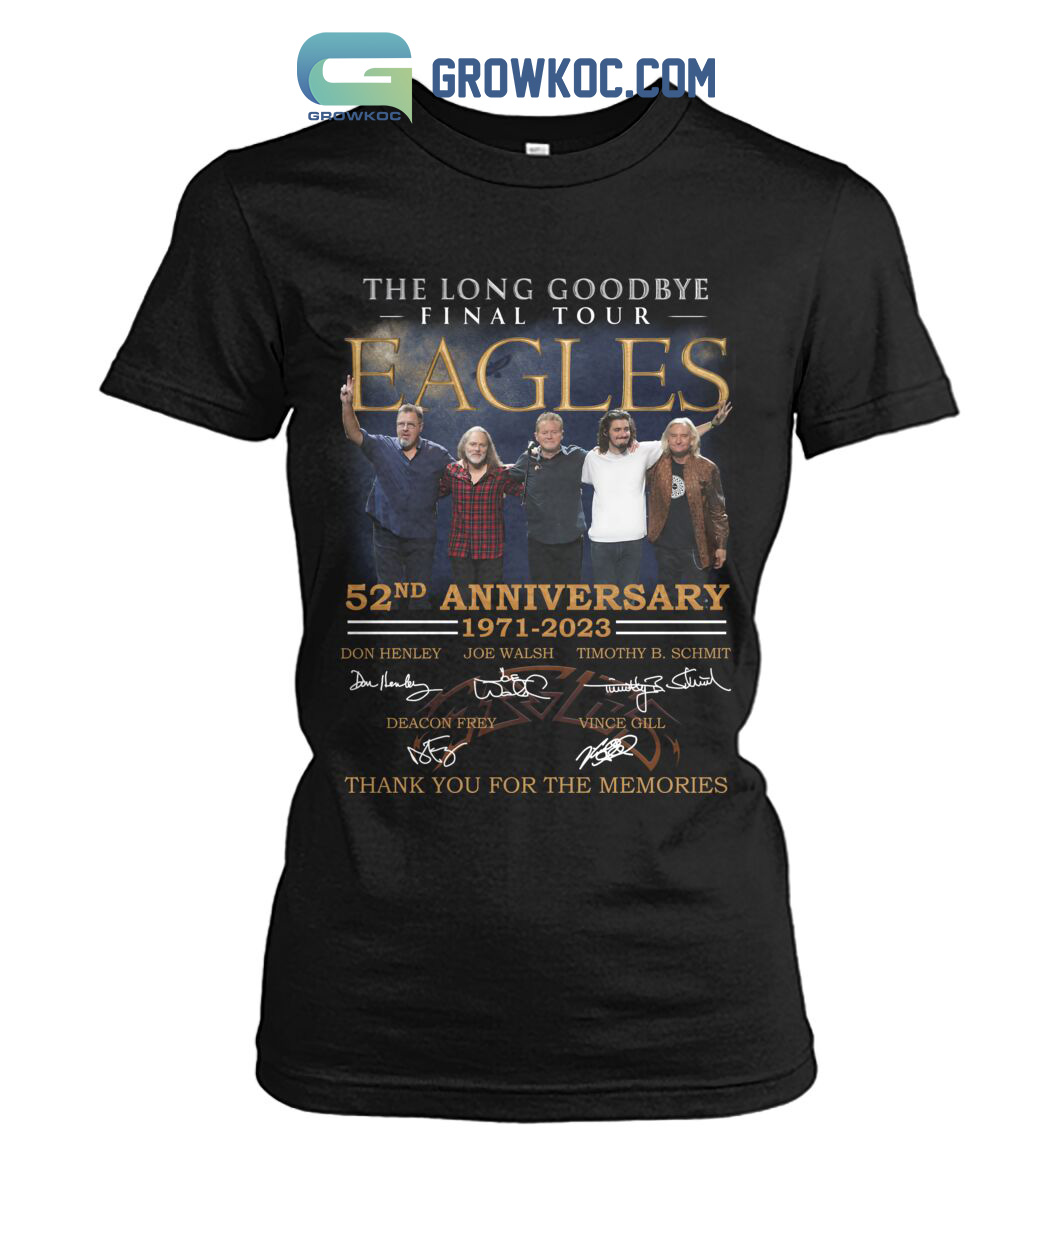 The Long Goodbye Final Tour Eagles 52nd Anniversary Memories T Shirt